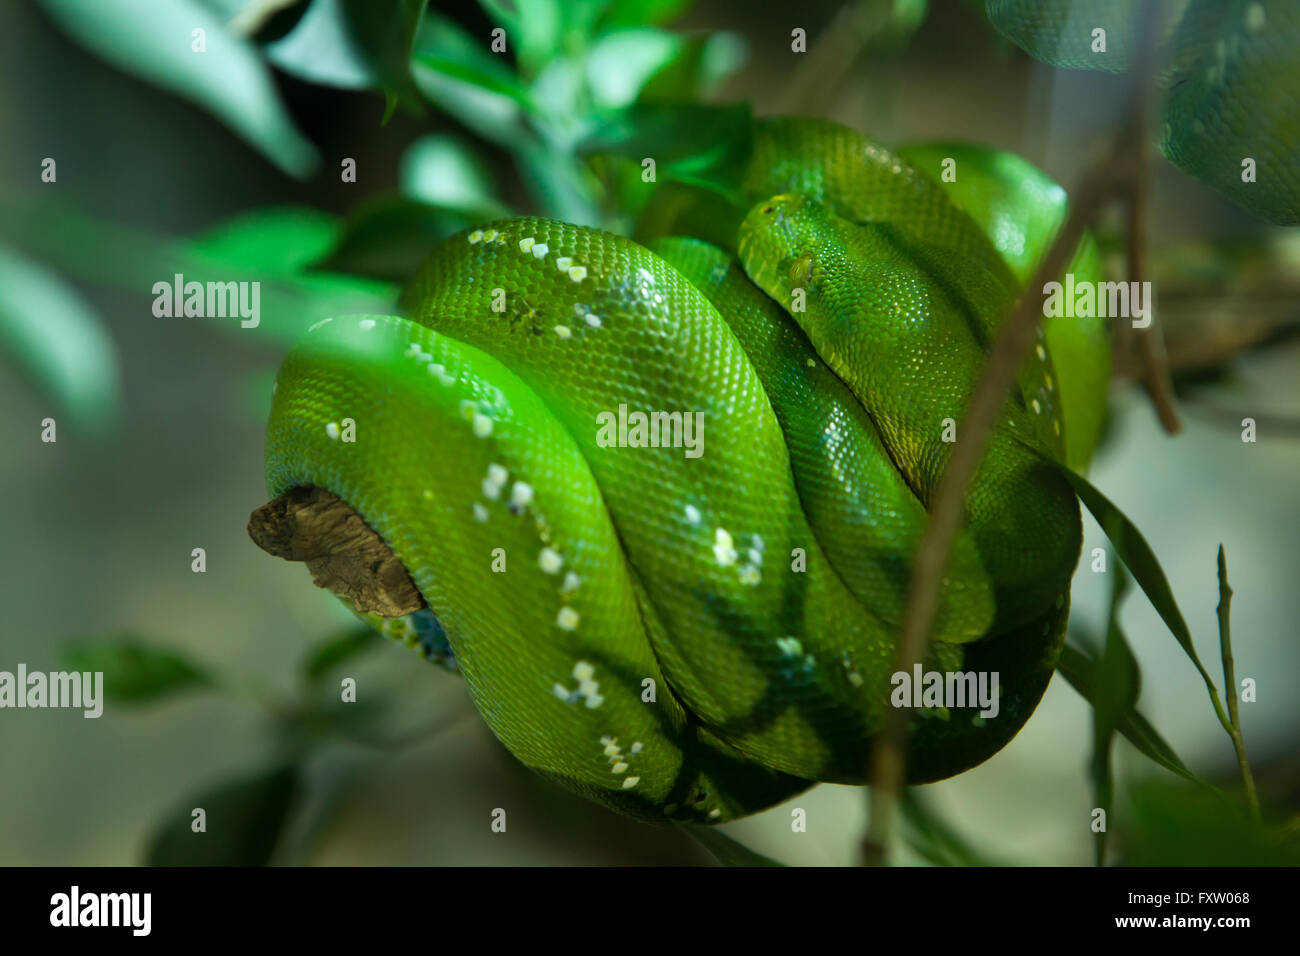 Green Tree Python - Los Angeles Zoo and Botanical Gardens